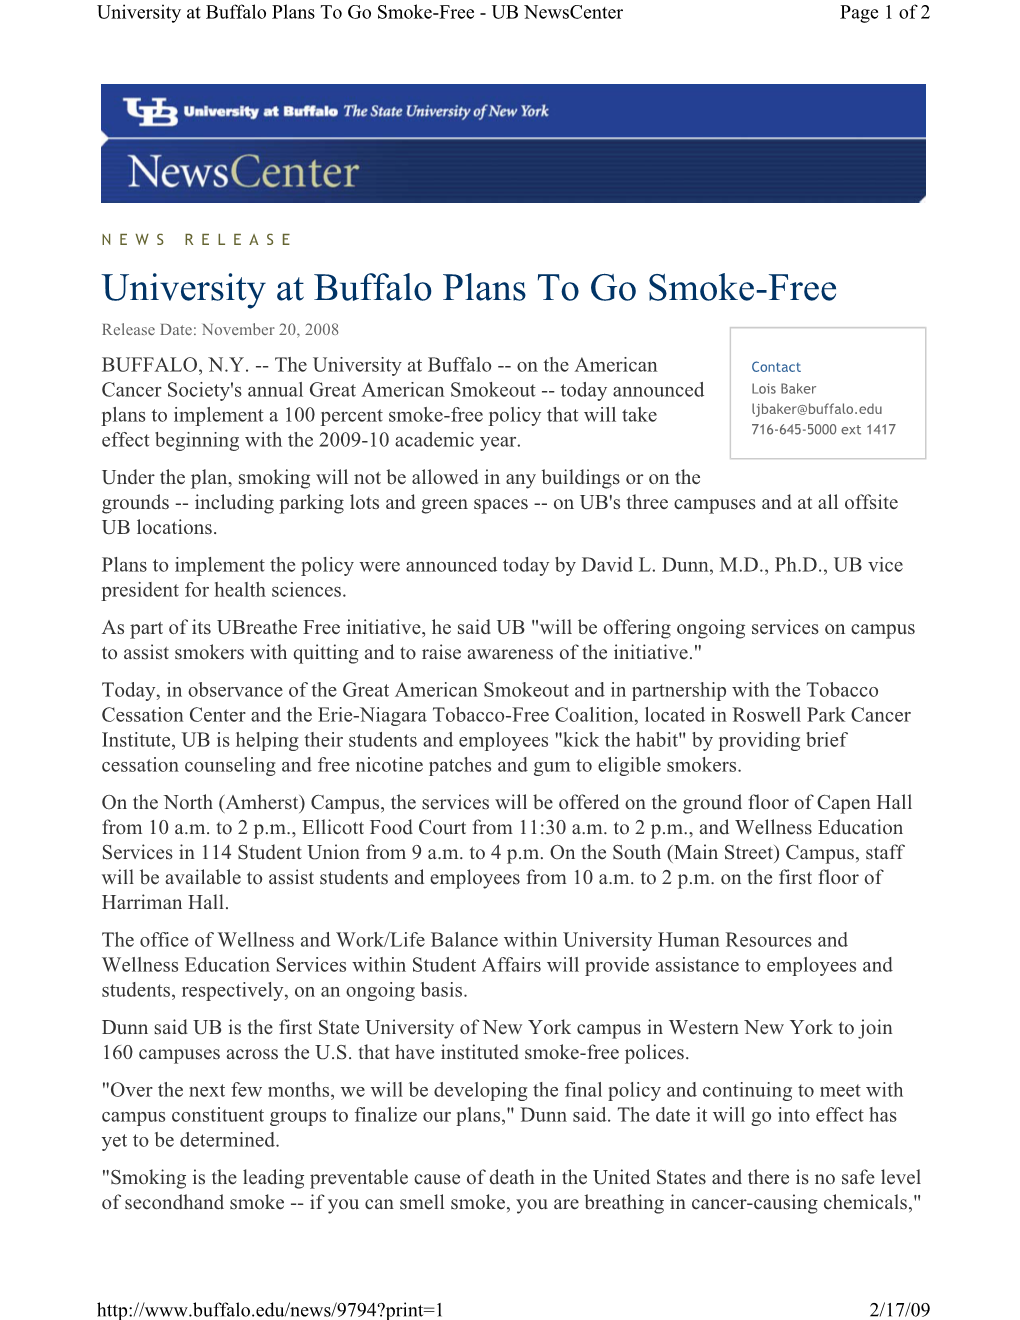 University at Buffalo Plans to Go Smoke-Free - UB Newscenter Page 1 of 2